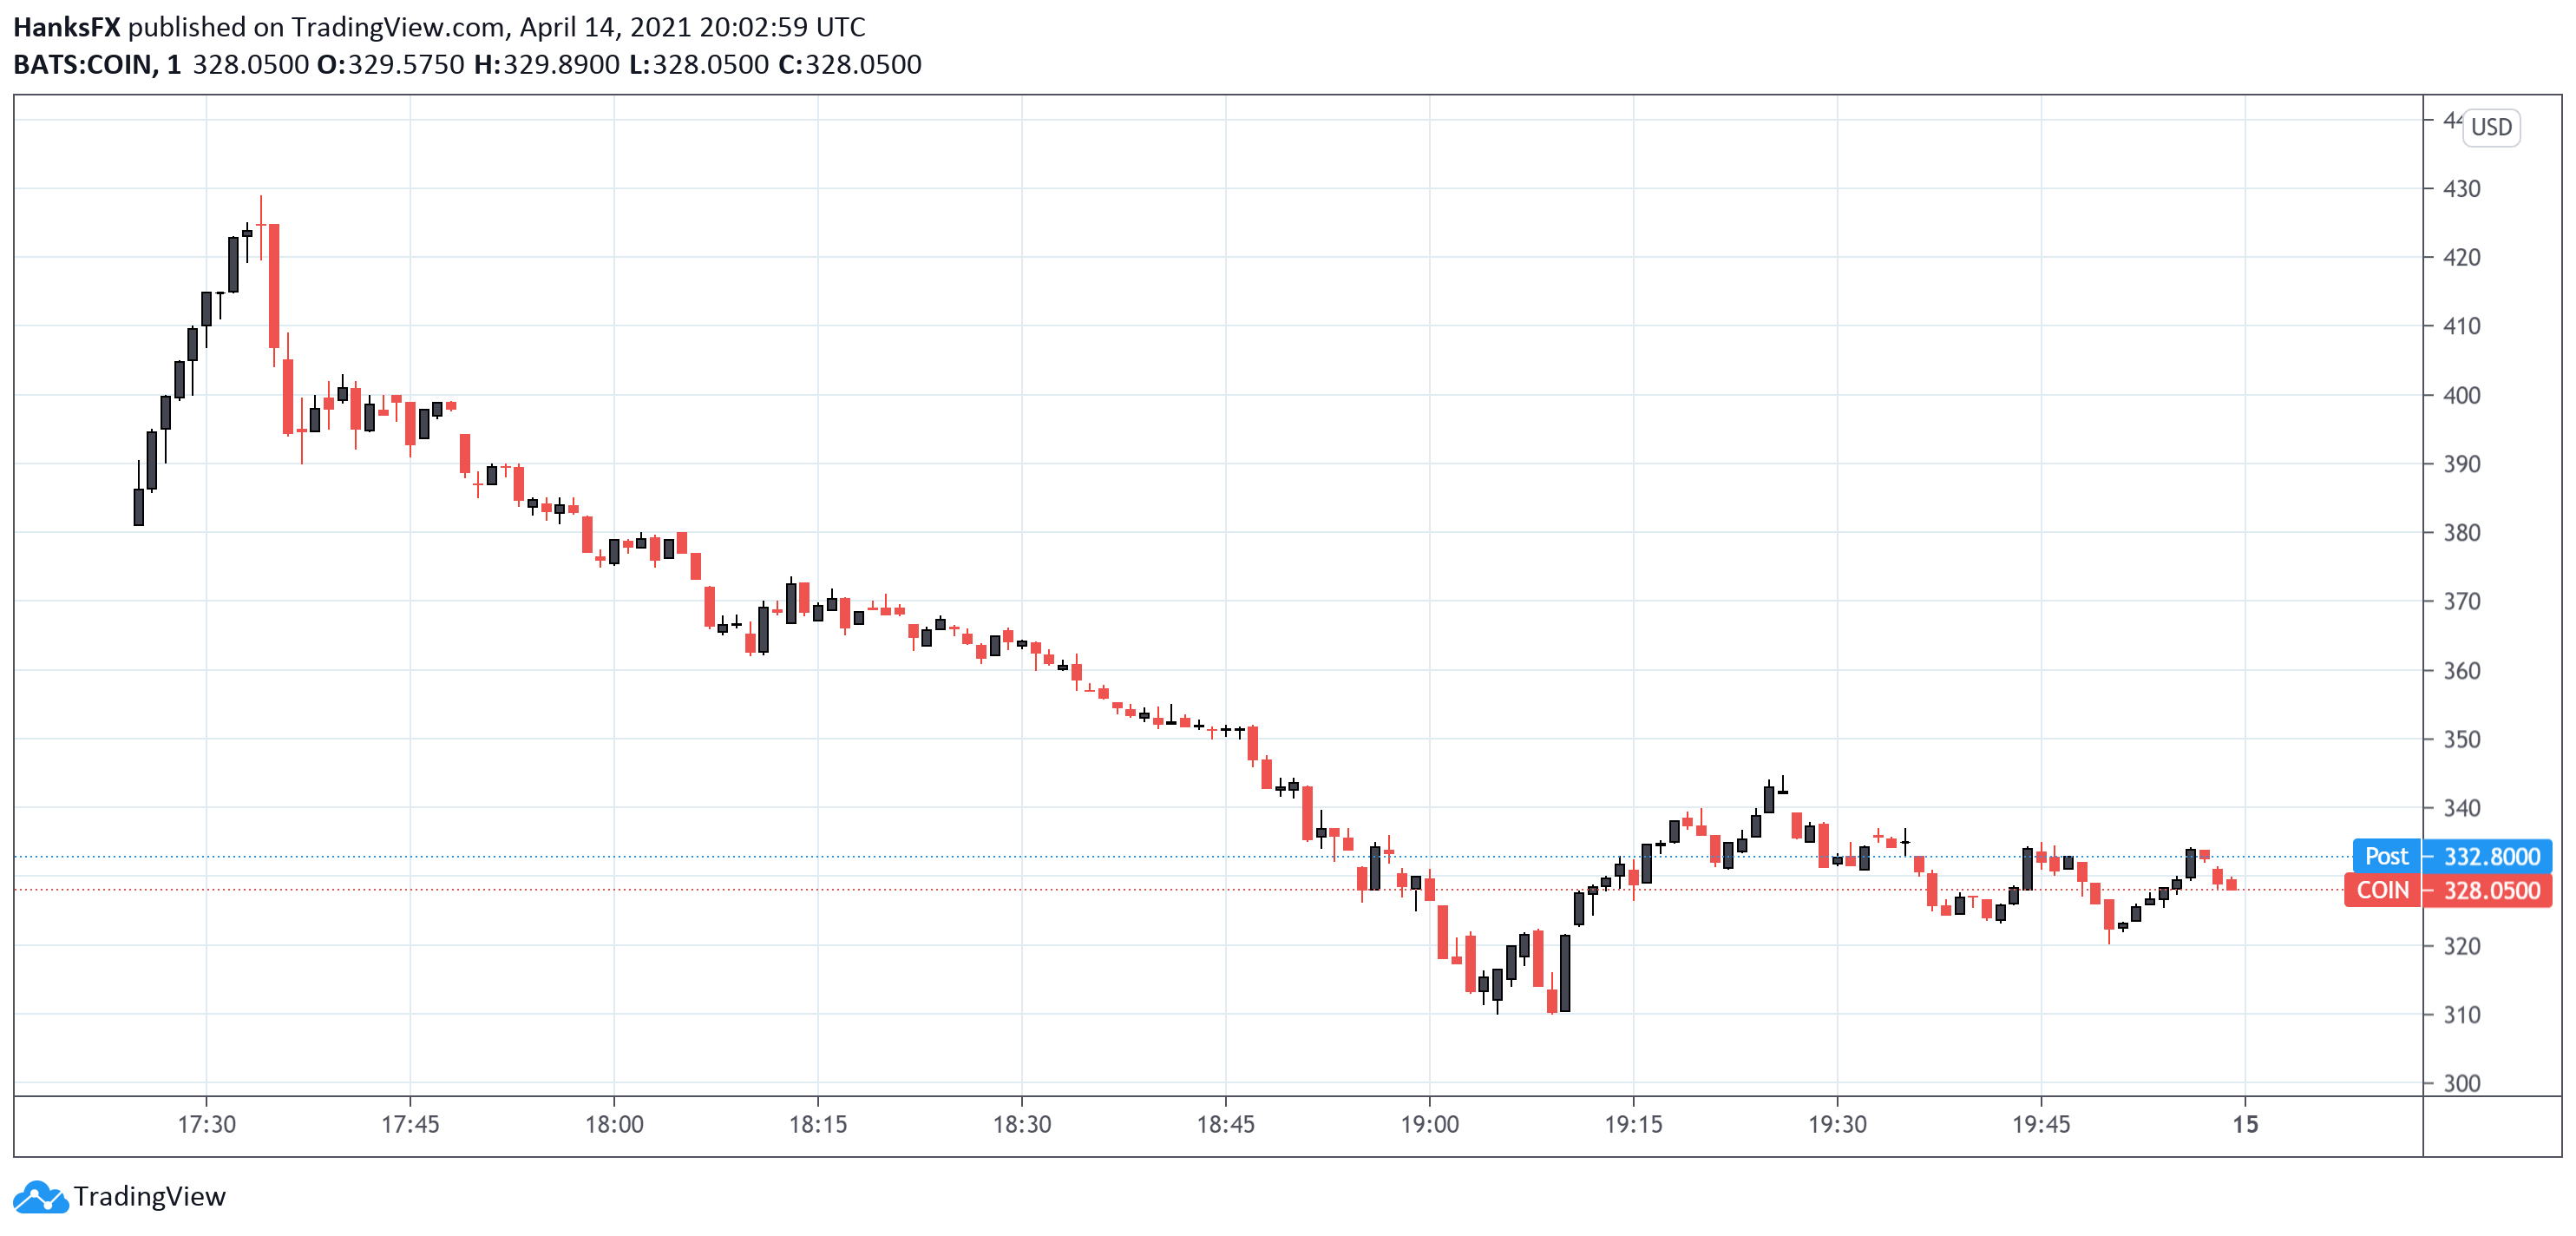 coinbase stock starting price